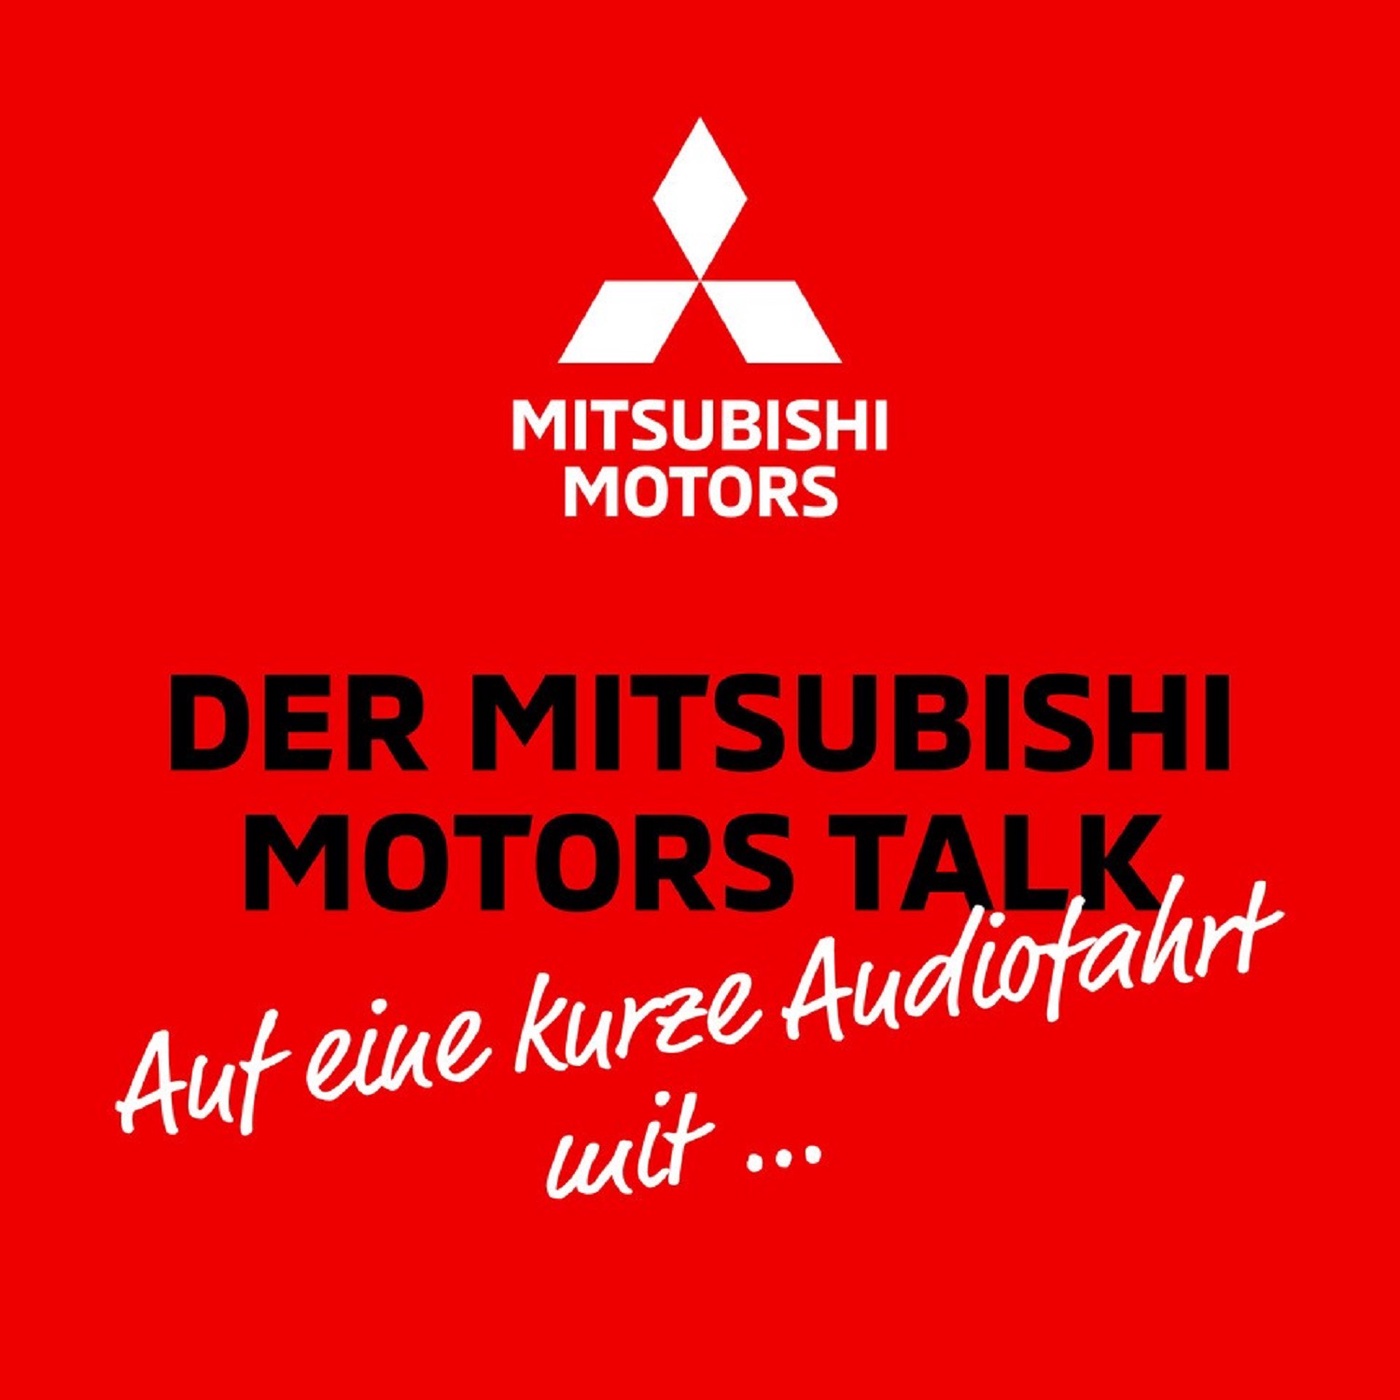 MITSUBISHI MOTORS TALK